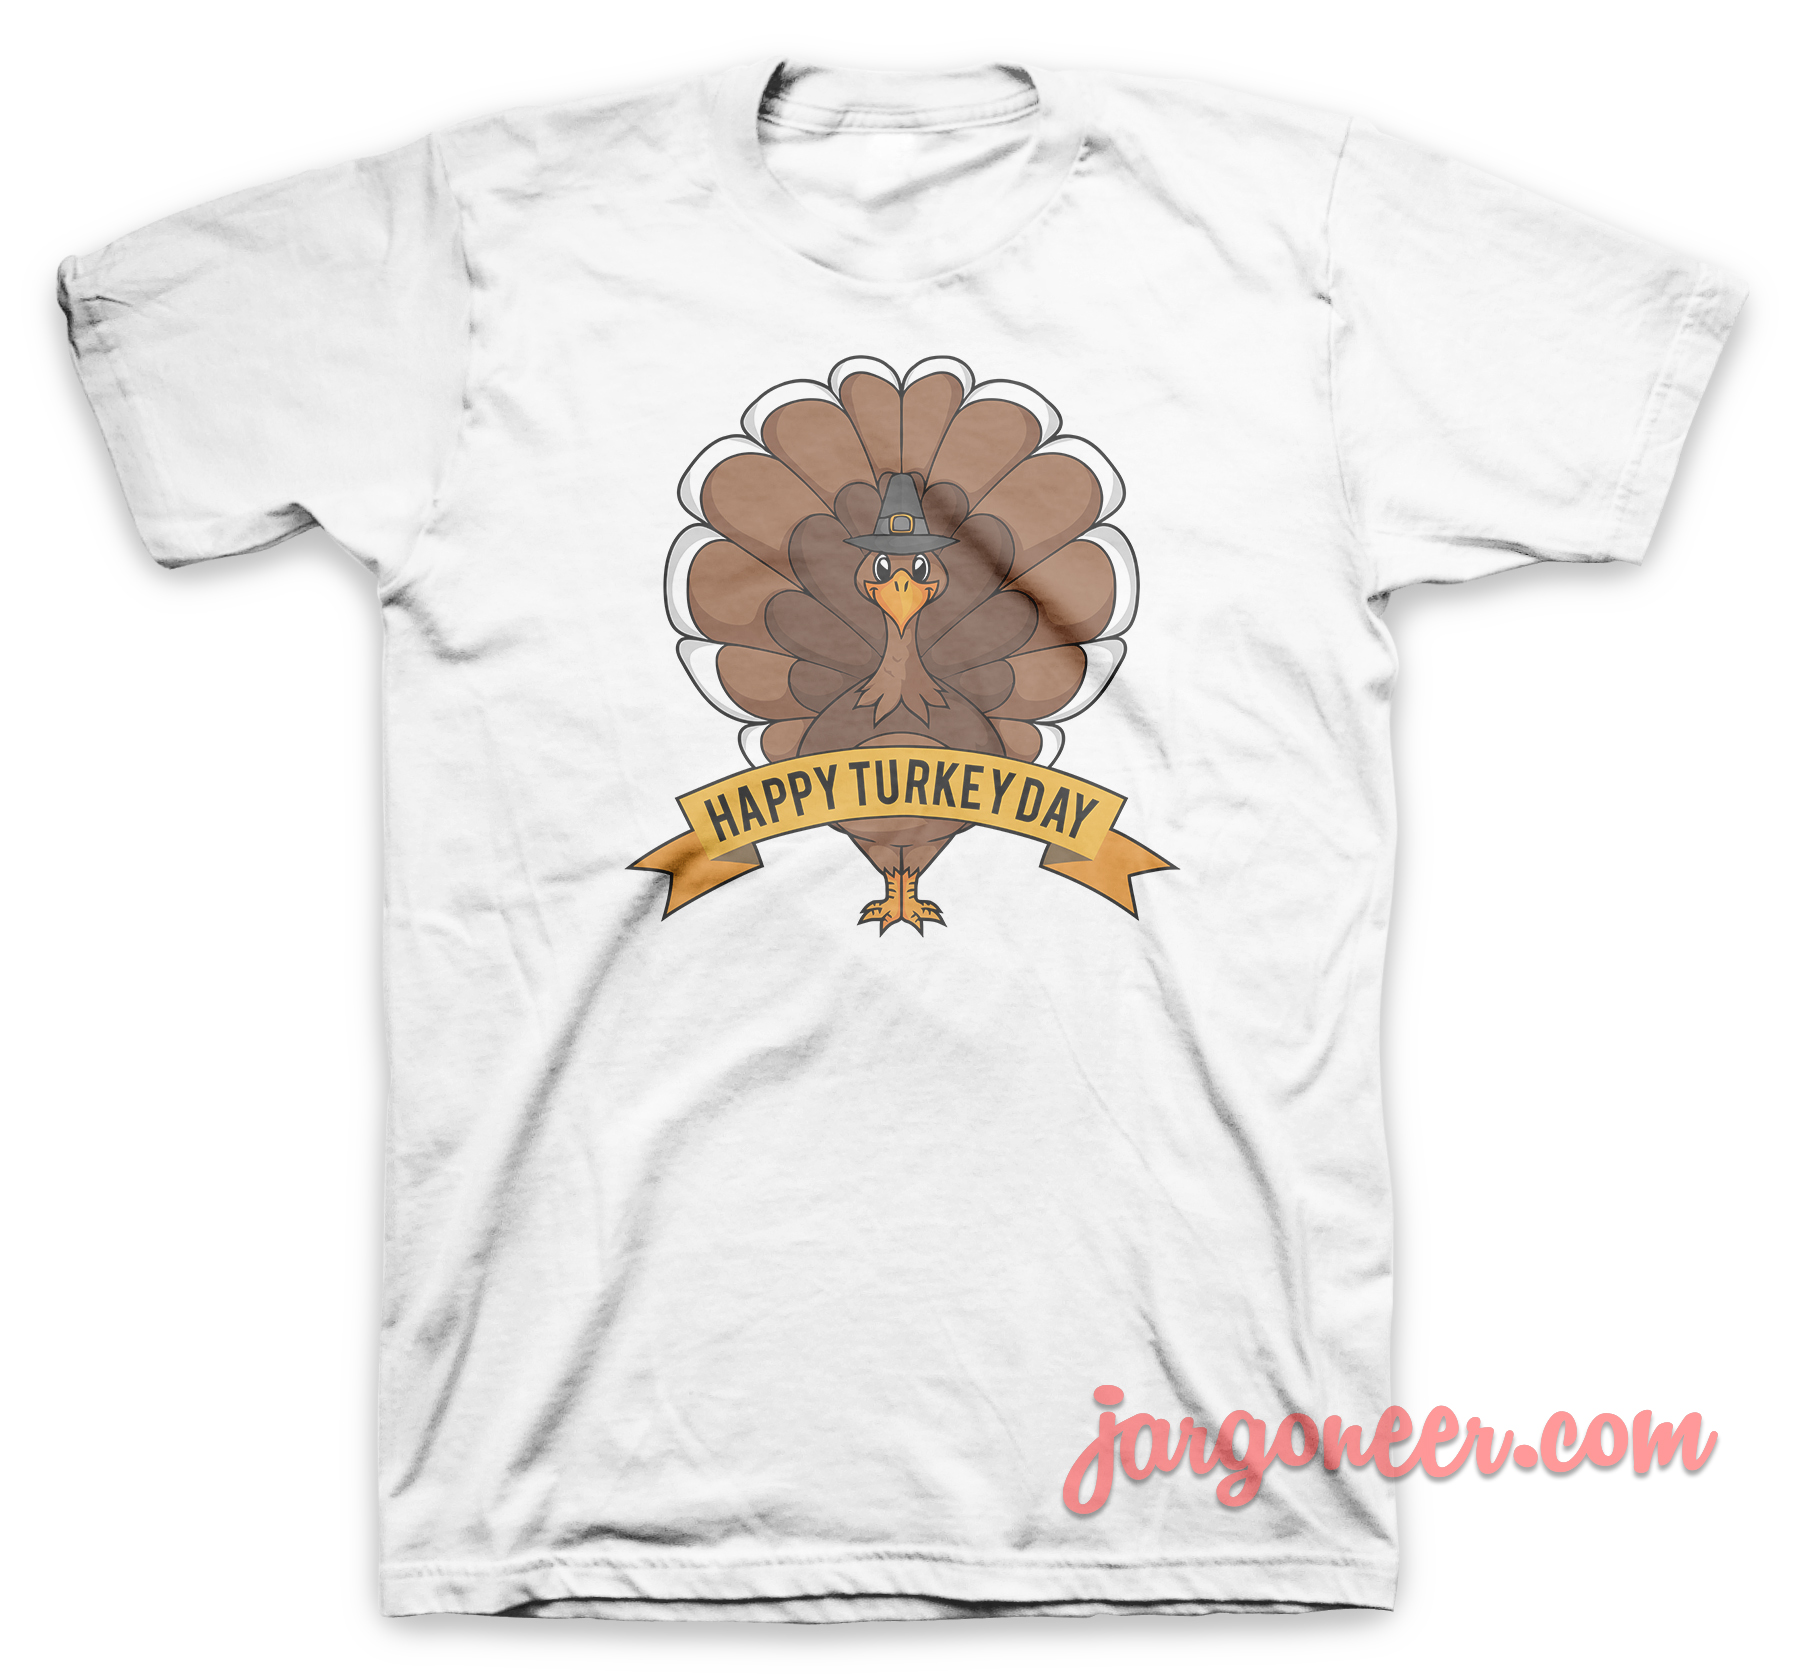 Happy Turkey Day White T Shirt - Shop Unique Graphic Cool Shirt Designs